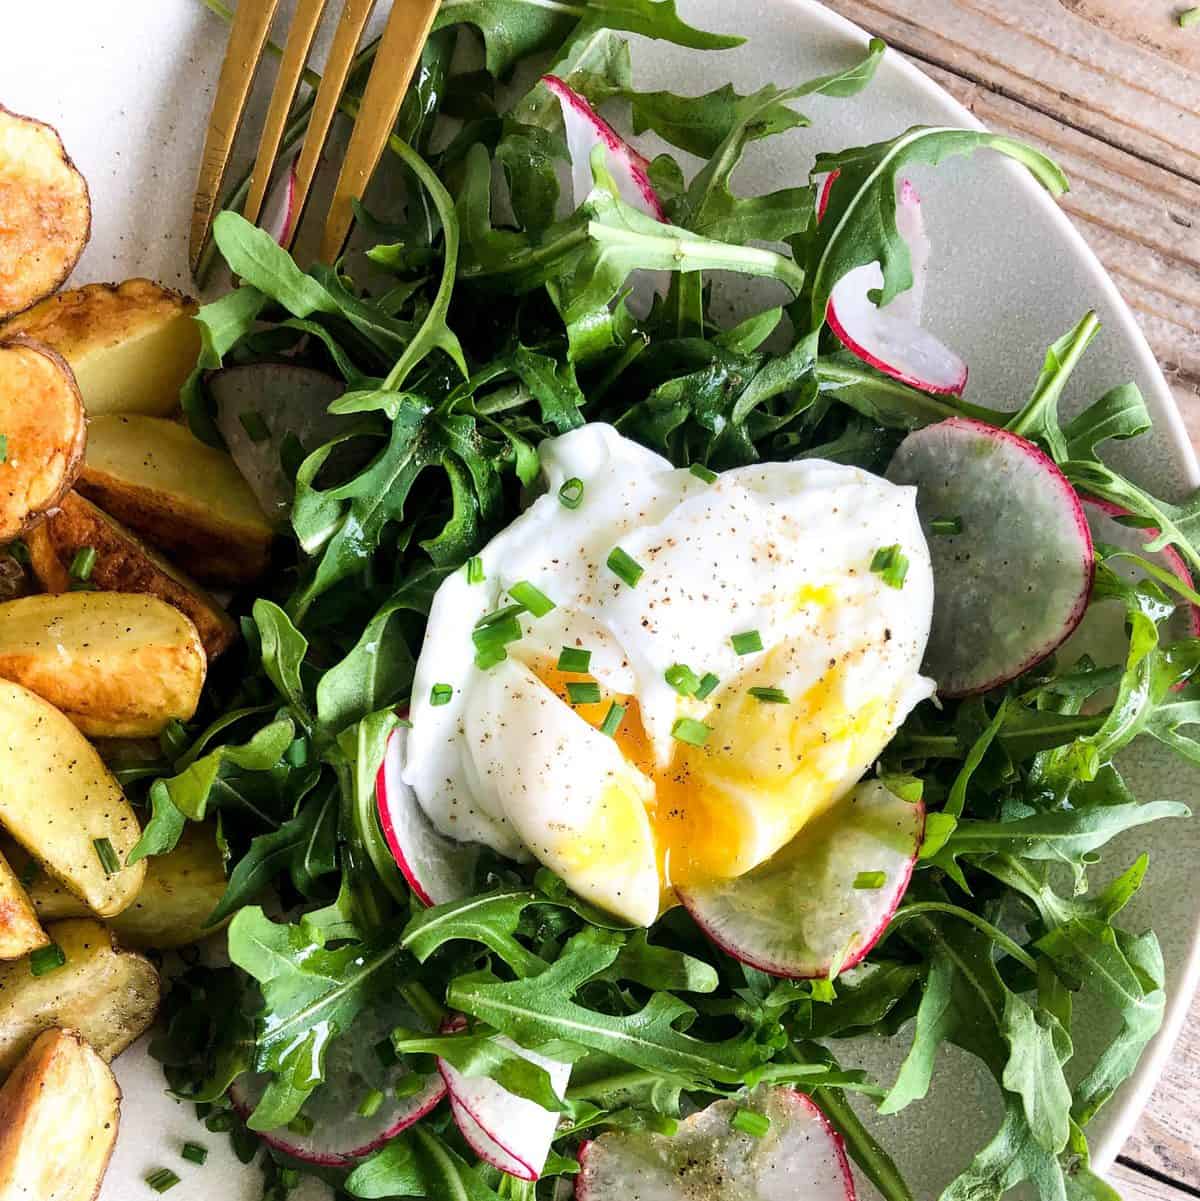 California Leafy greens - Arugula Salad with poached egg